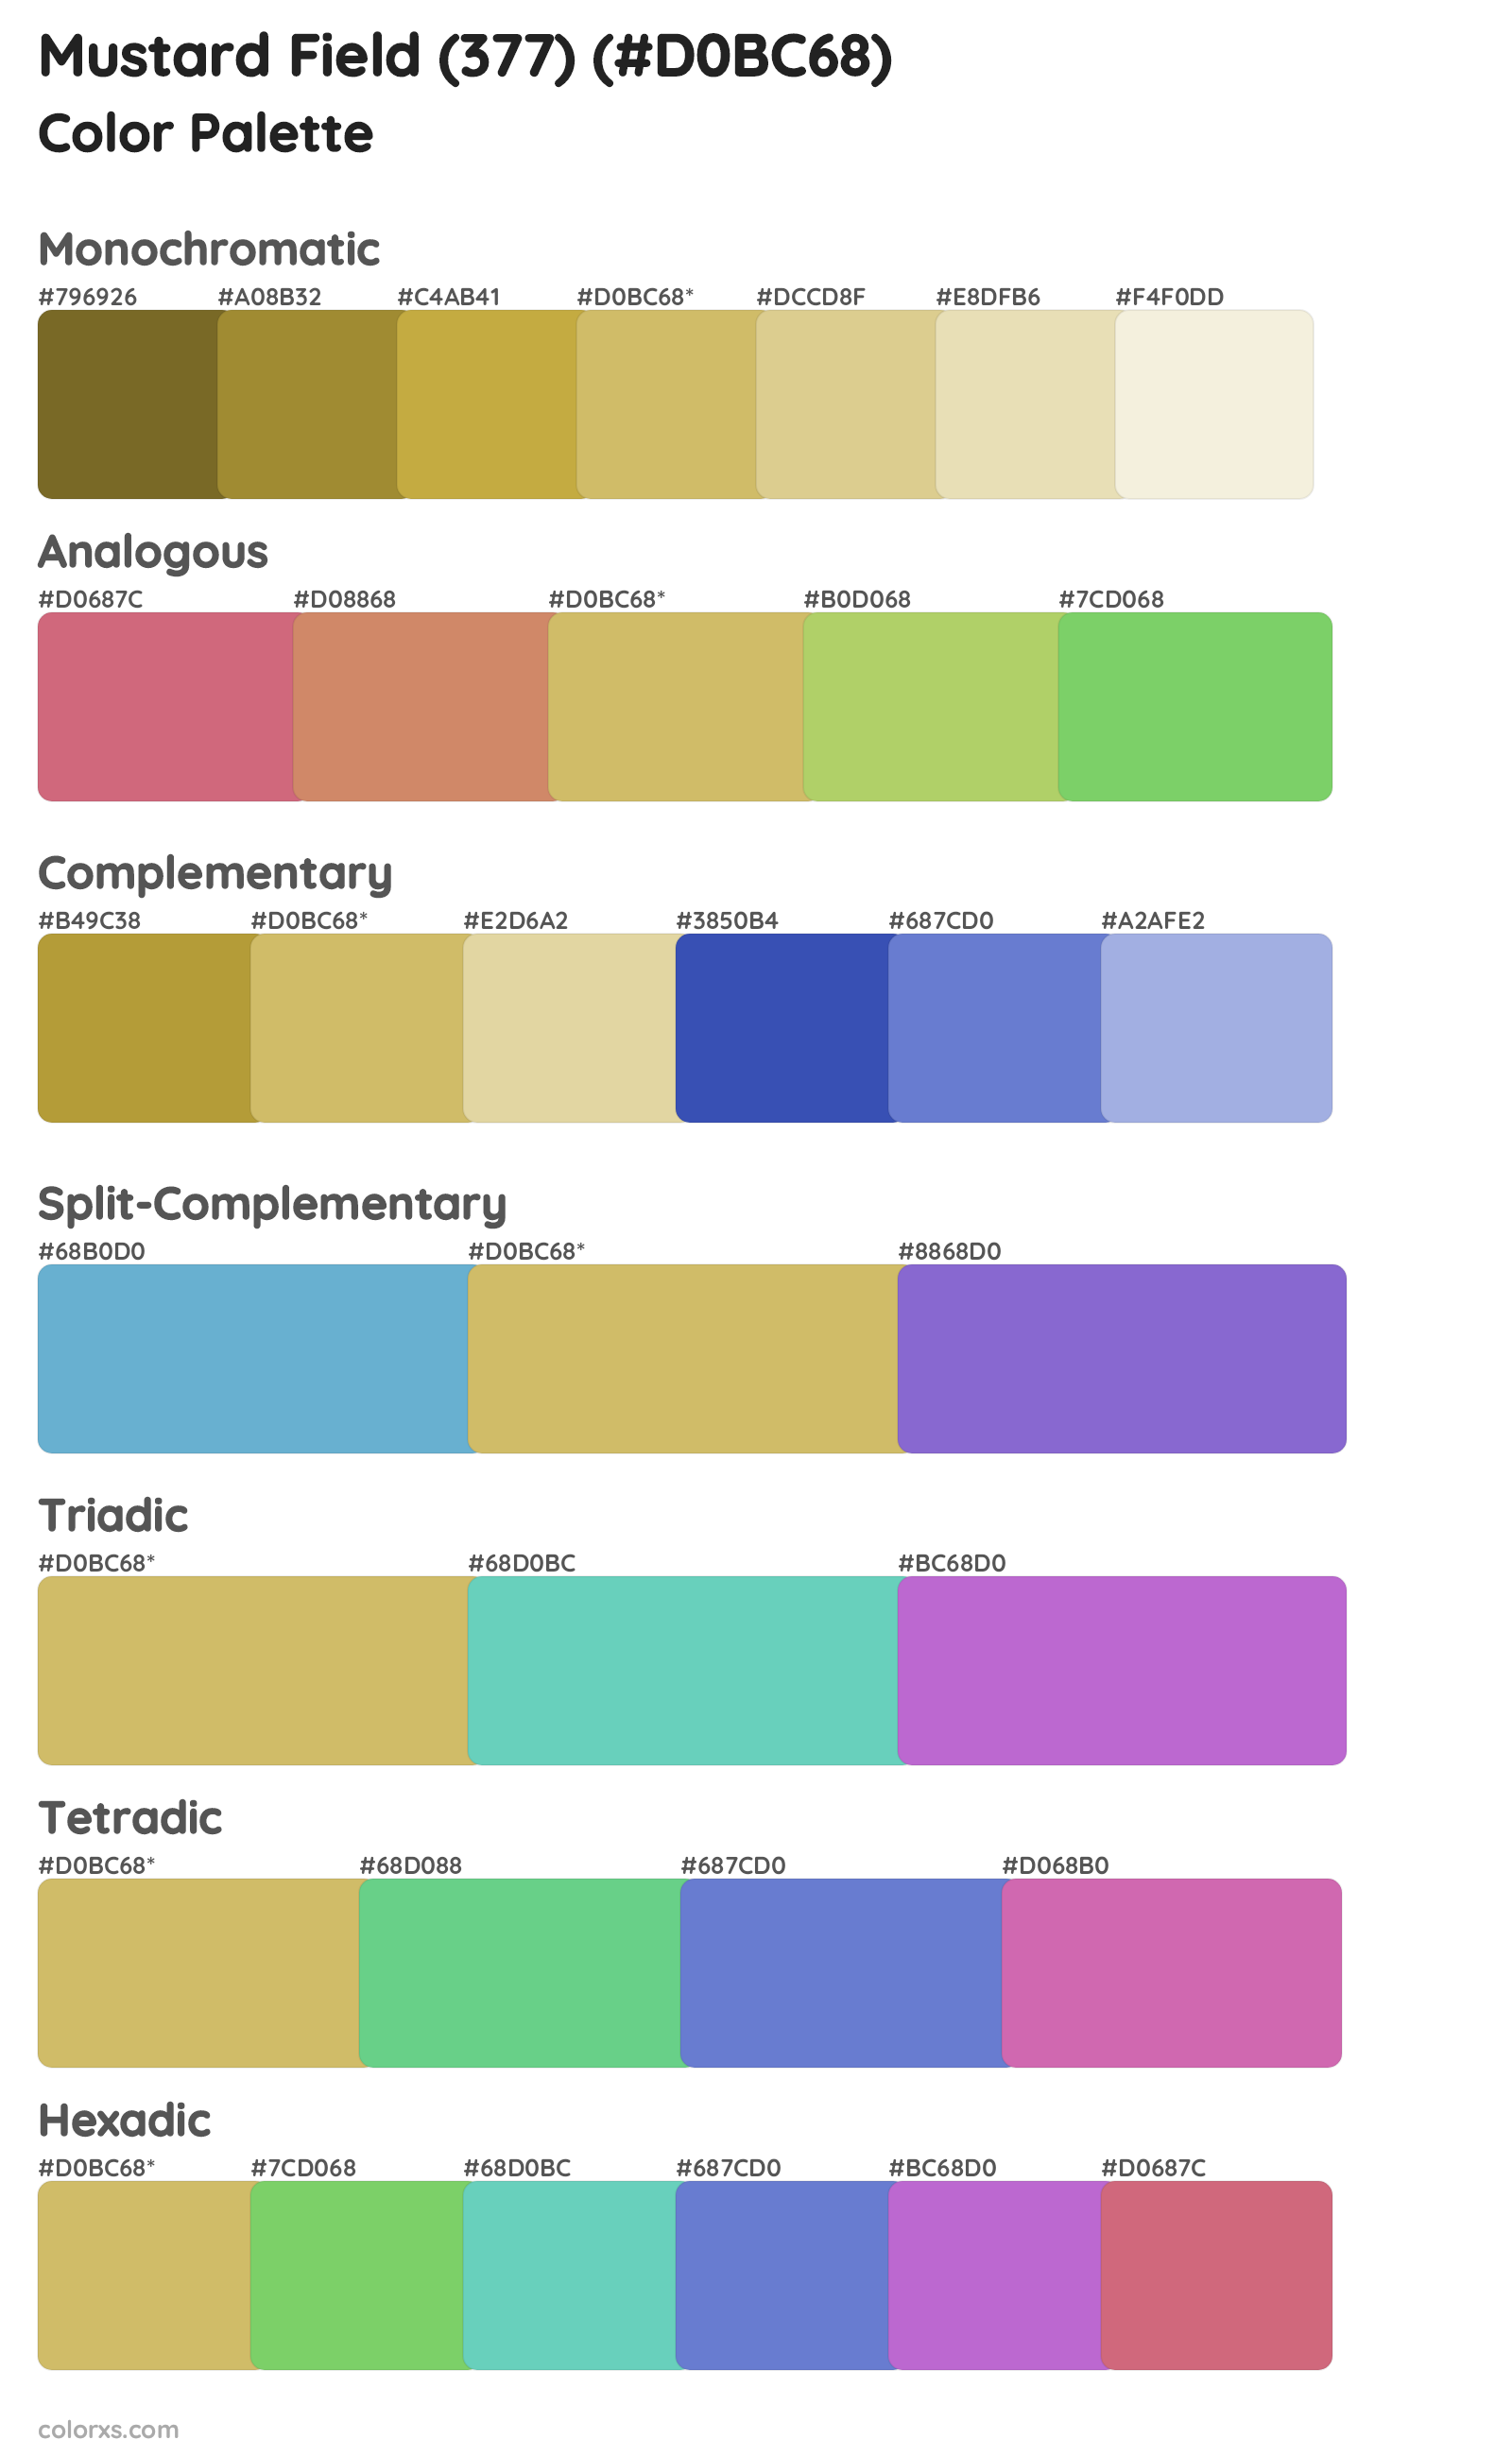 Mustard Field (377) Color Scheme Palettes